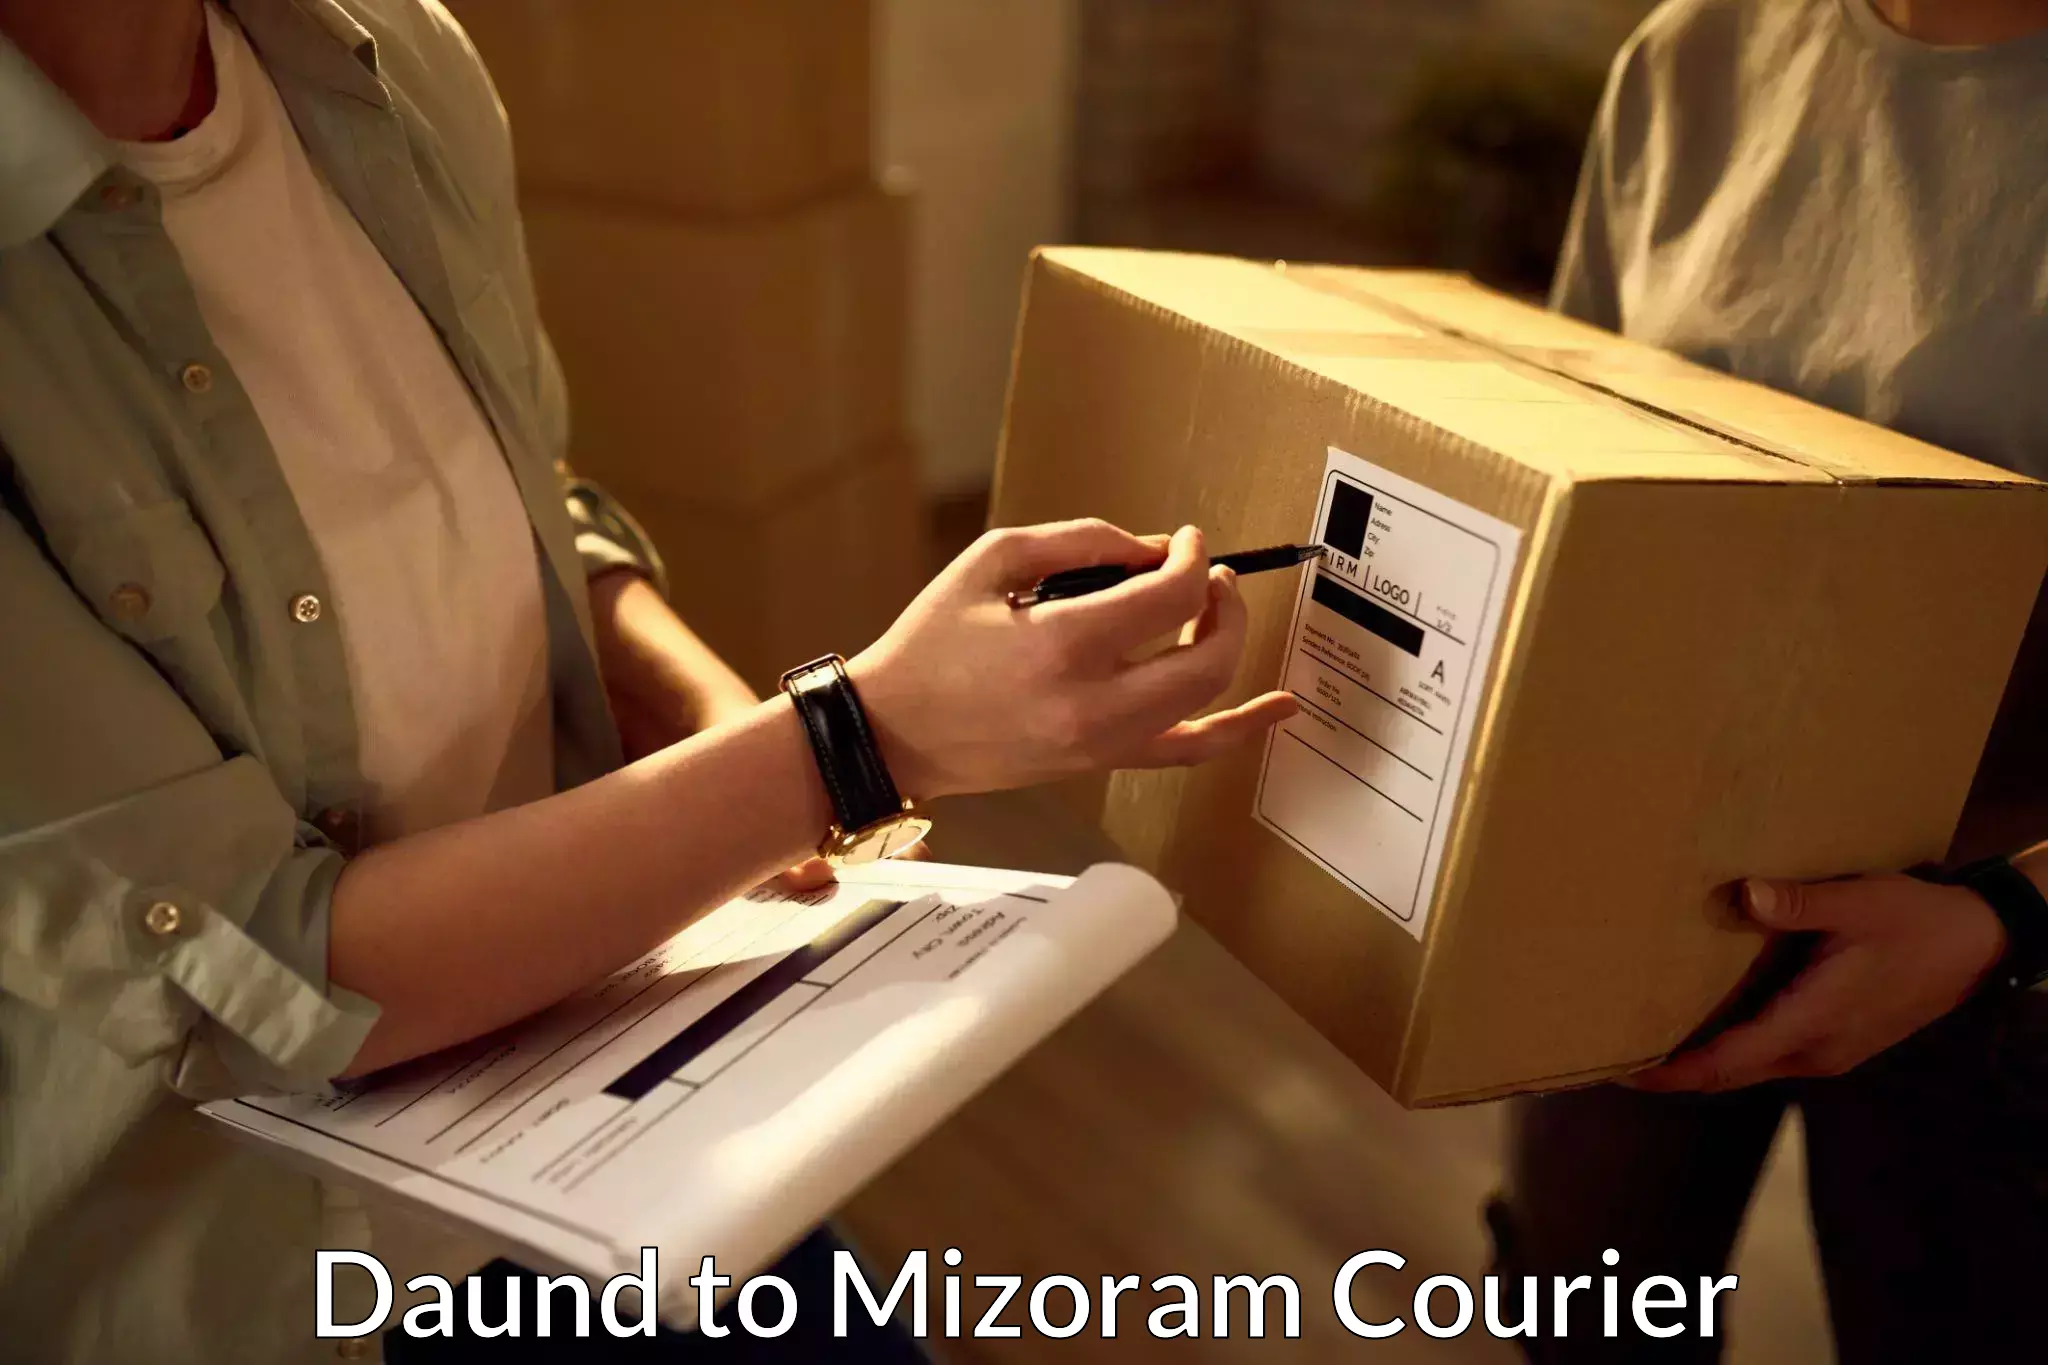 Quick dispatch service Daund to Mizoram